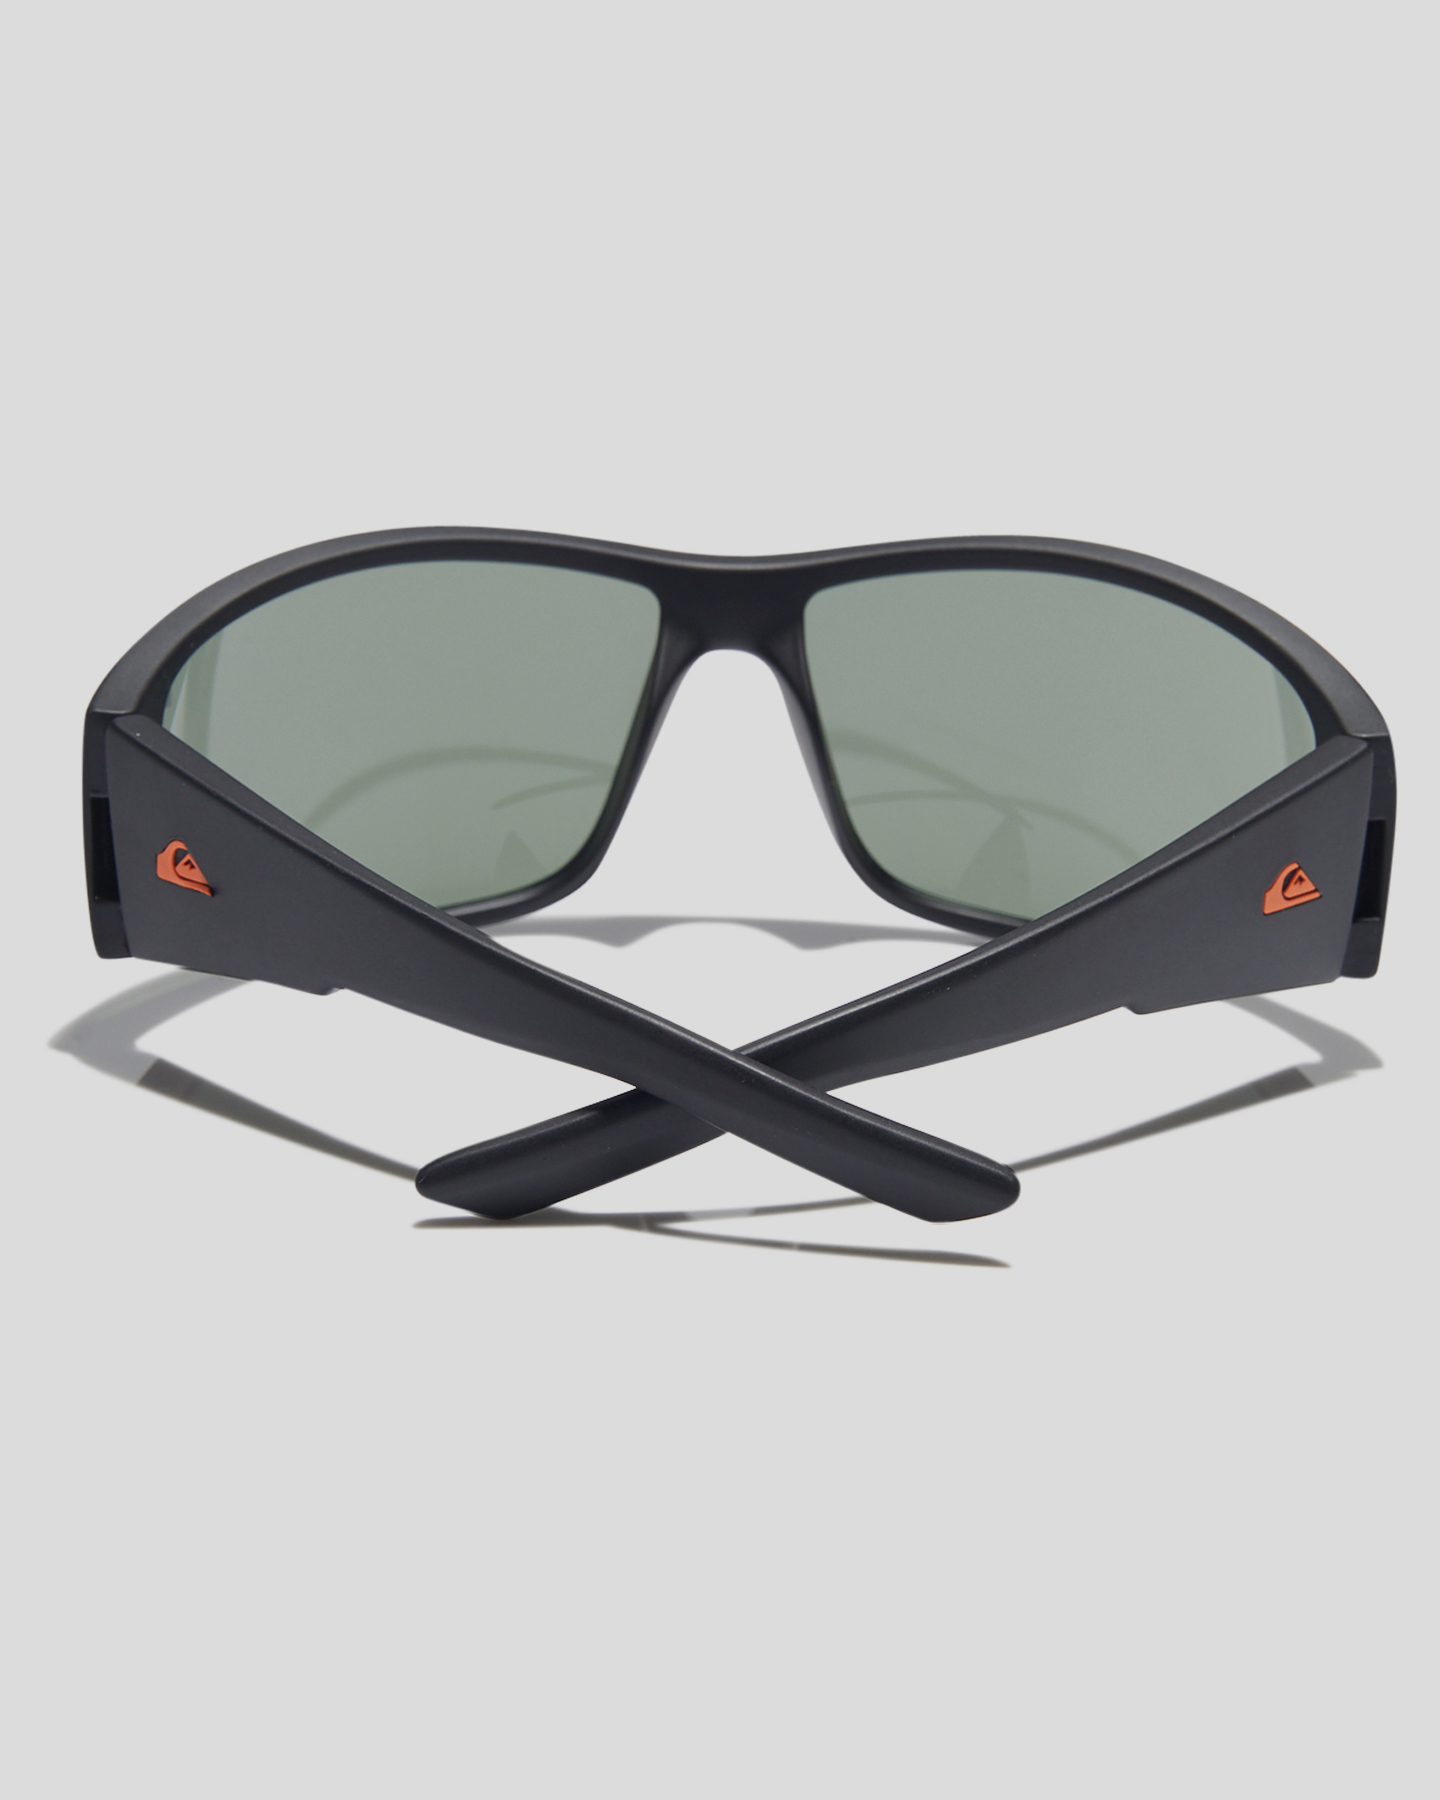 Akdk Polarised Sunglasses SurfStitch Quiksilver Floatable Polar | Grn - Matt Black